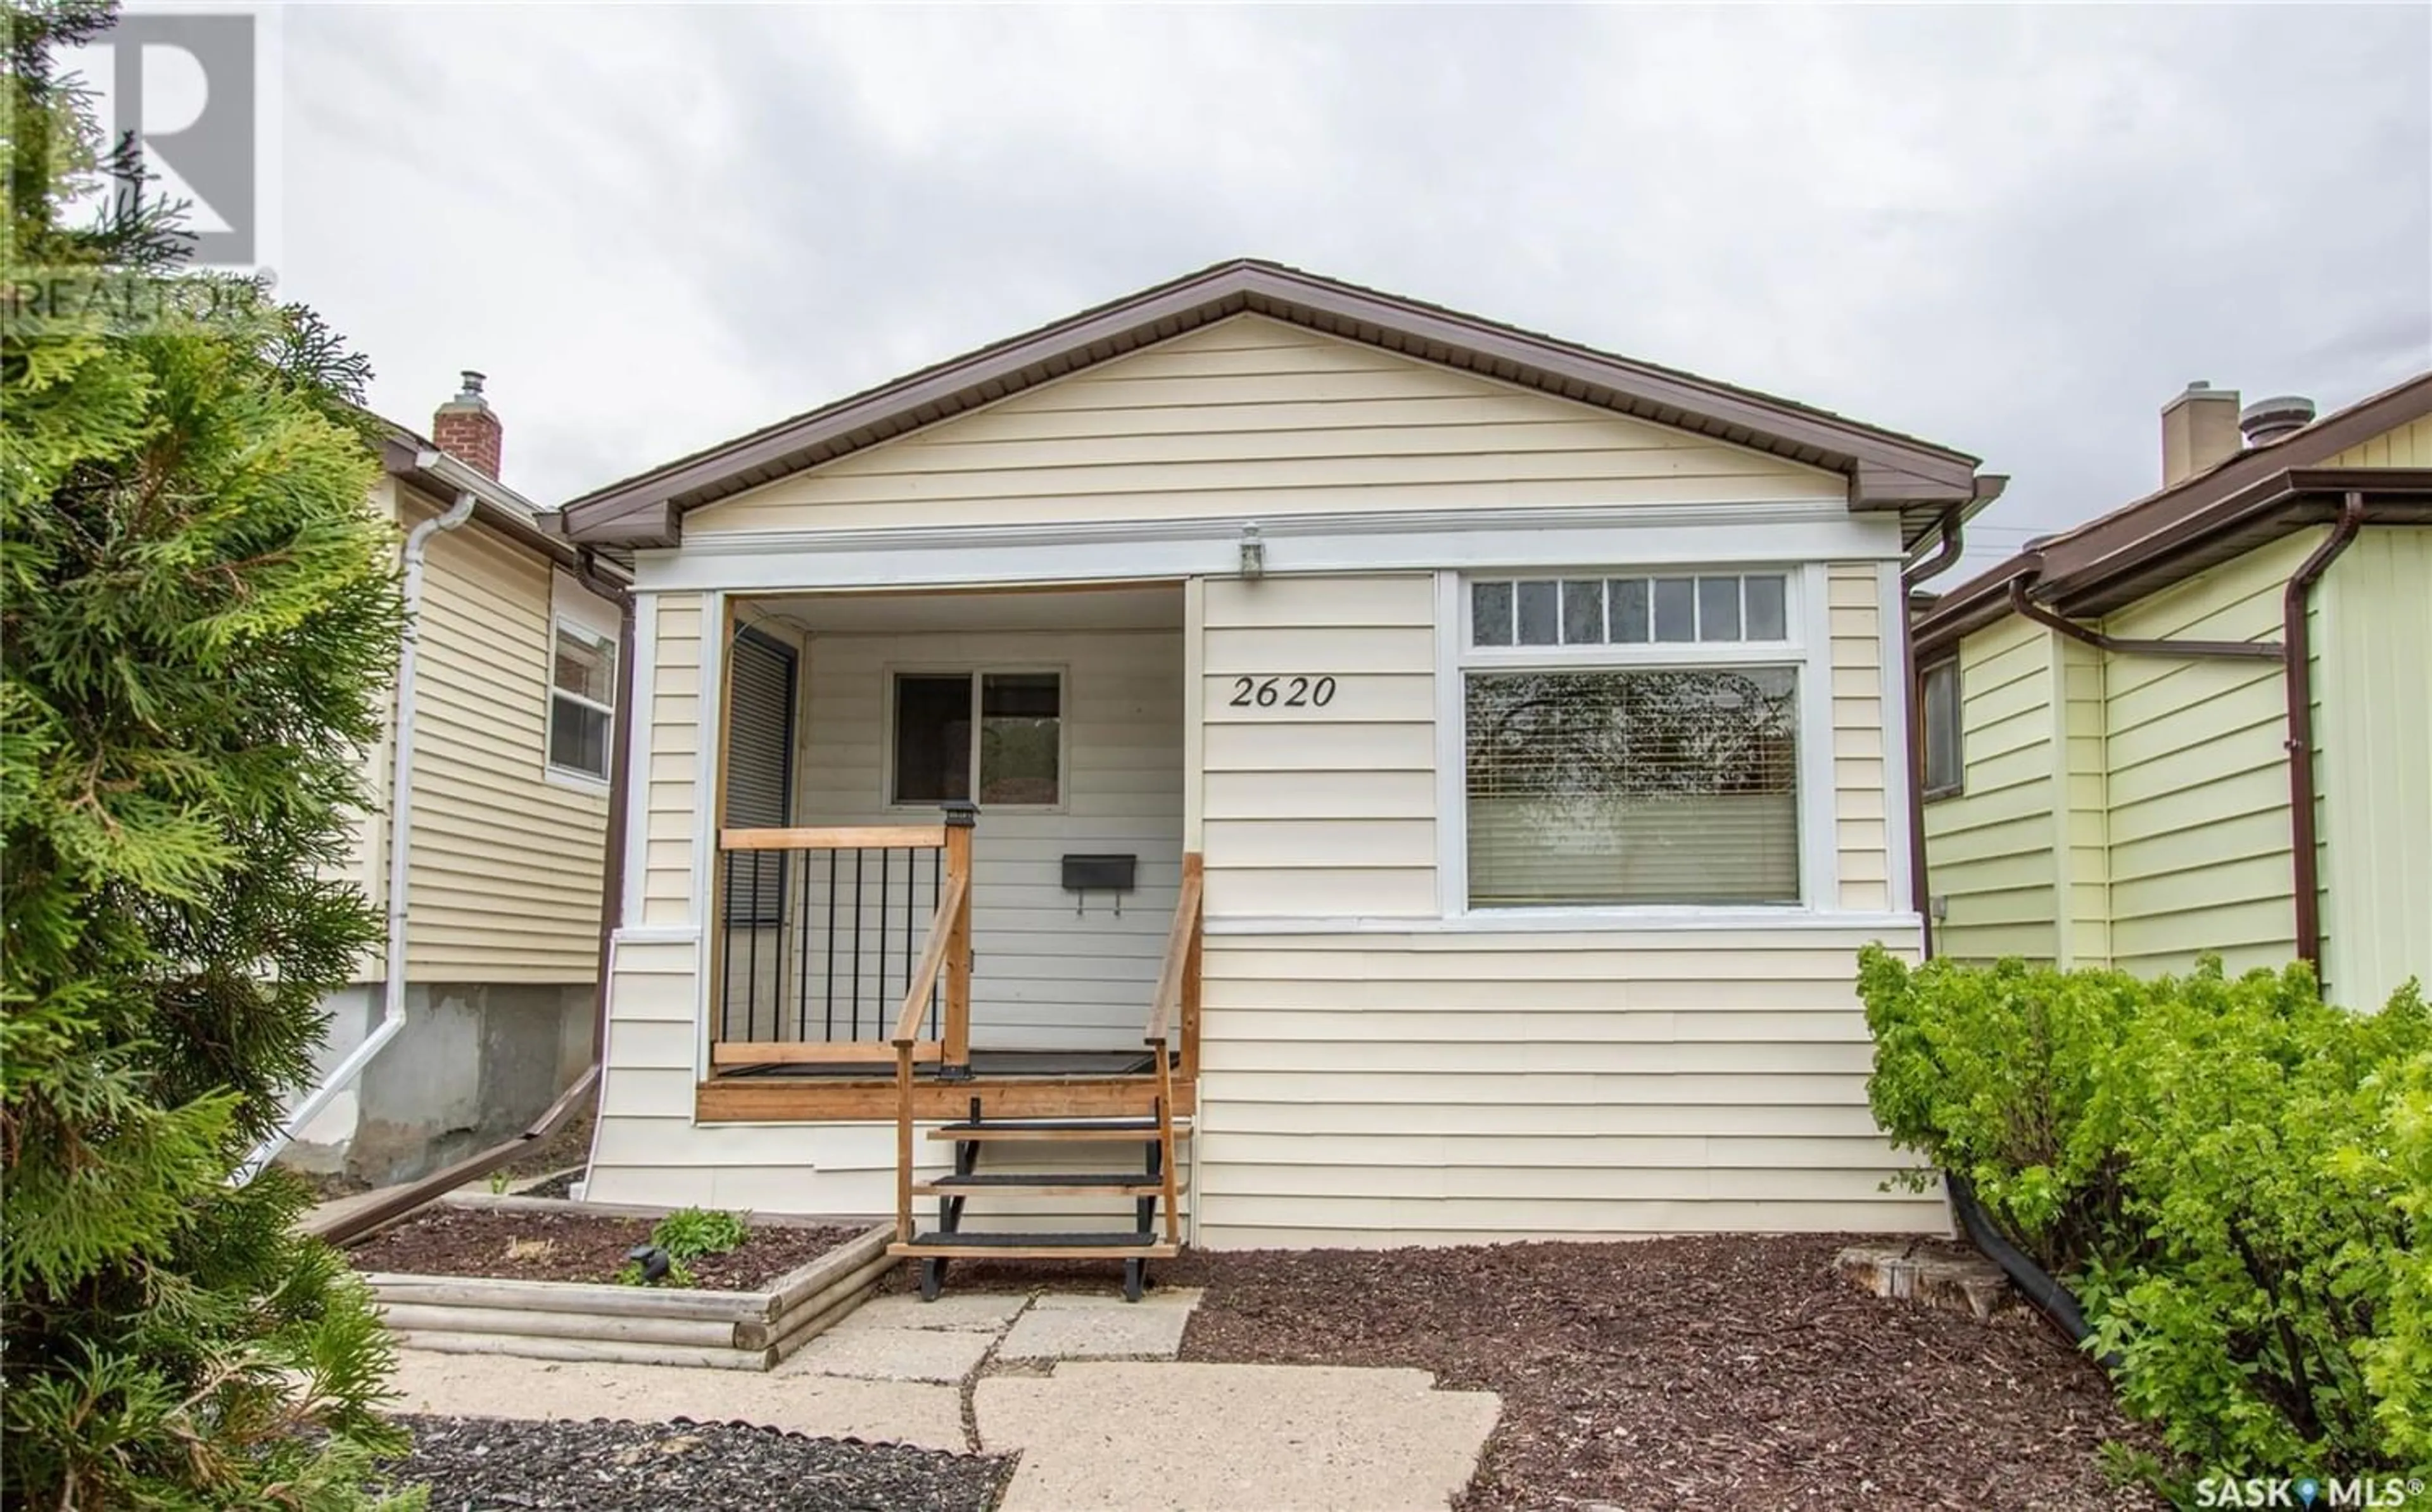 Home with vinyl exterior material for 2620 Wallace STREET, Regina Saskatchewan S4N4B6